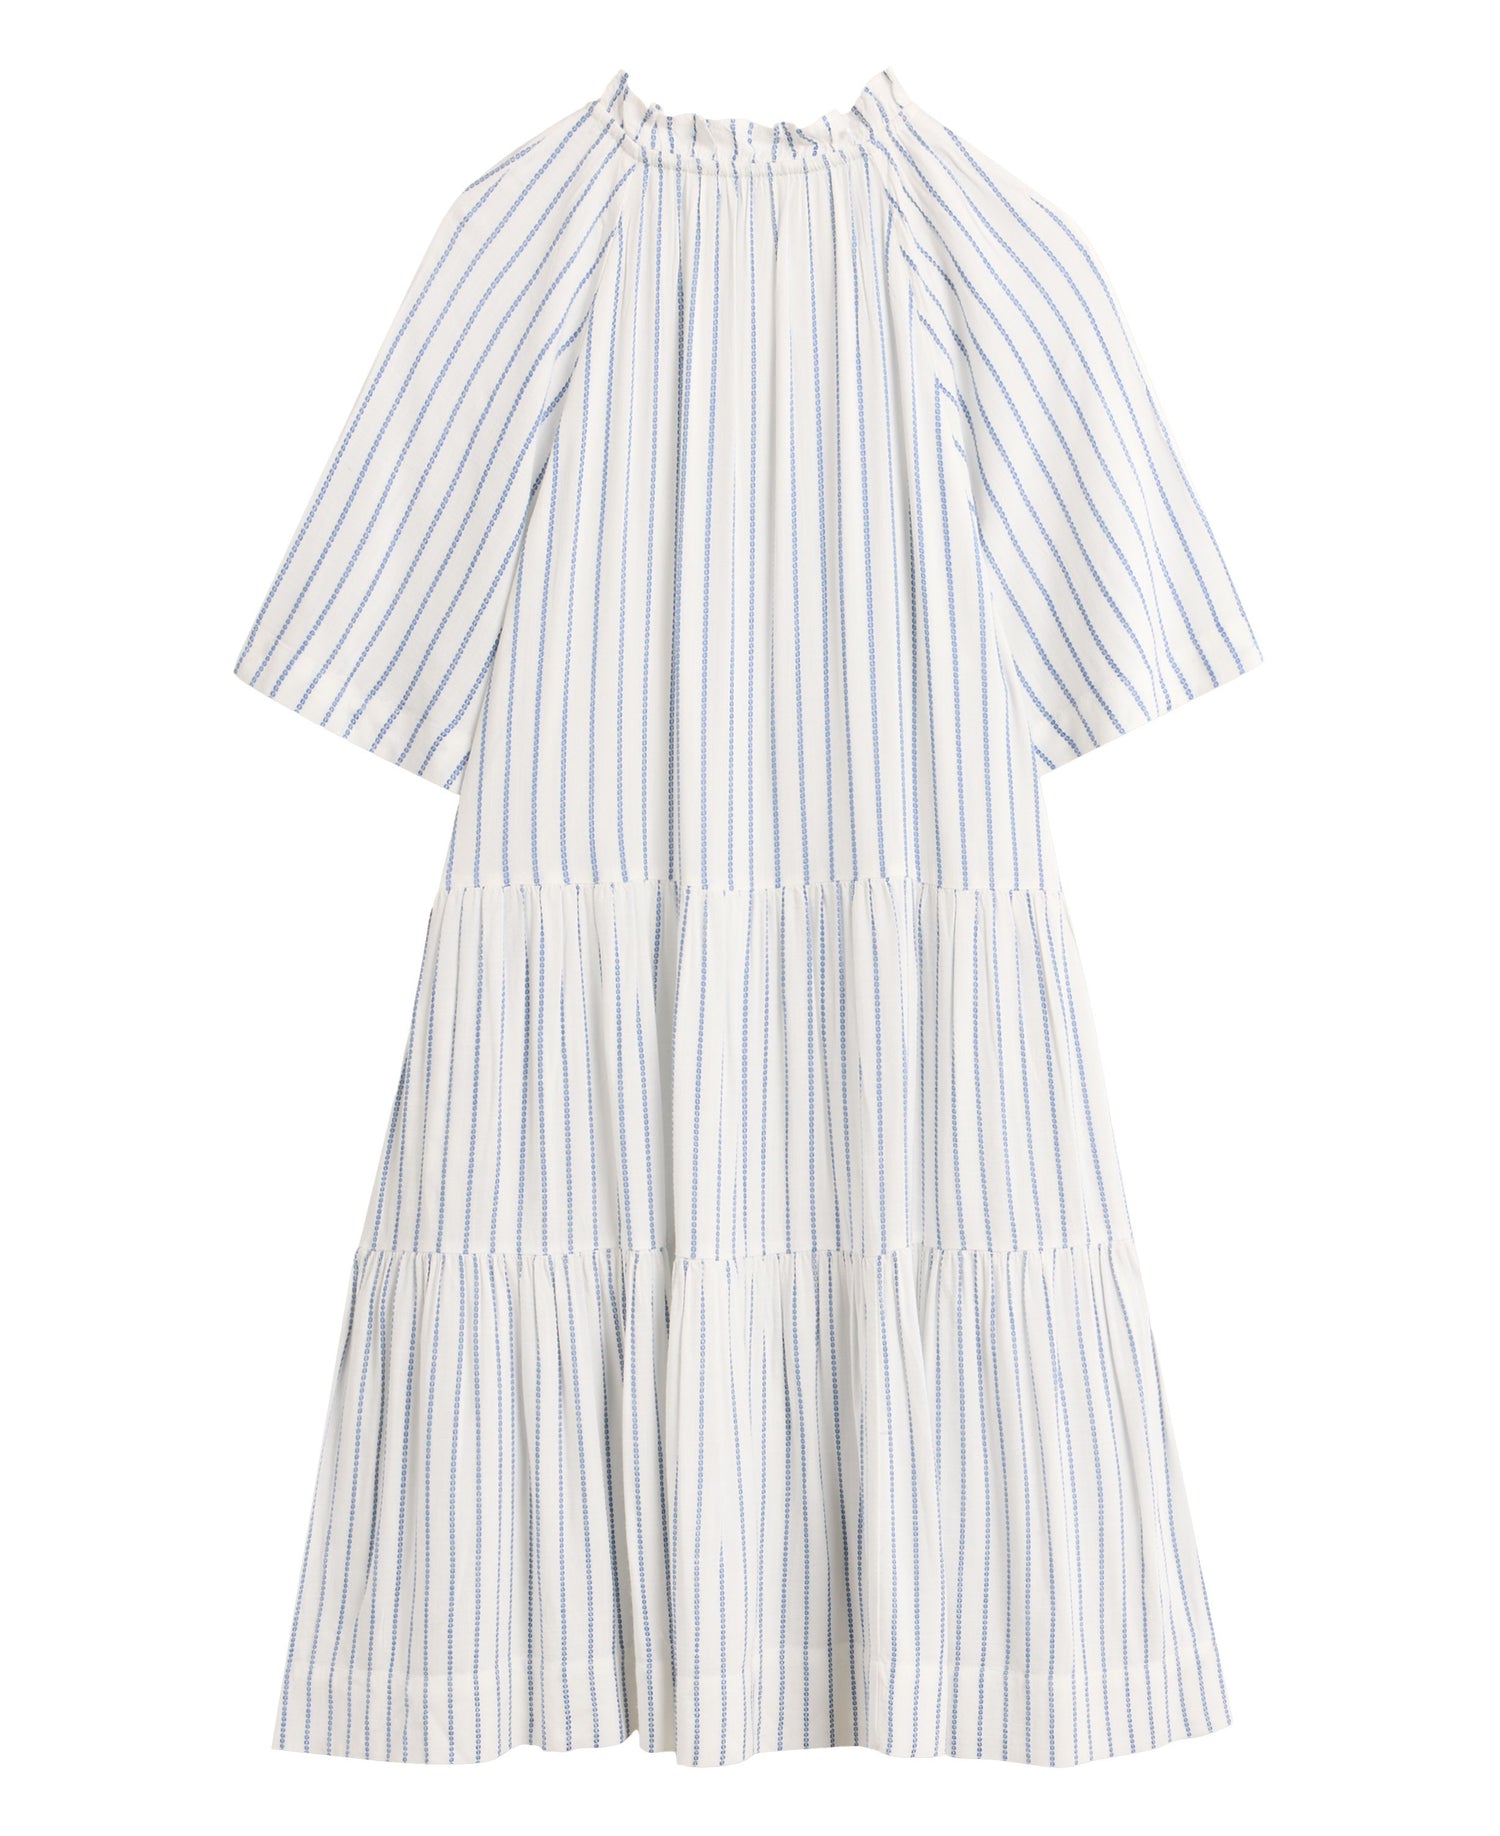 Sophia Eco Vero Stripe Dress - Ivory Multi